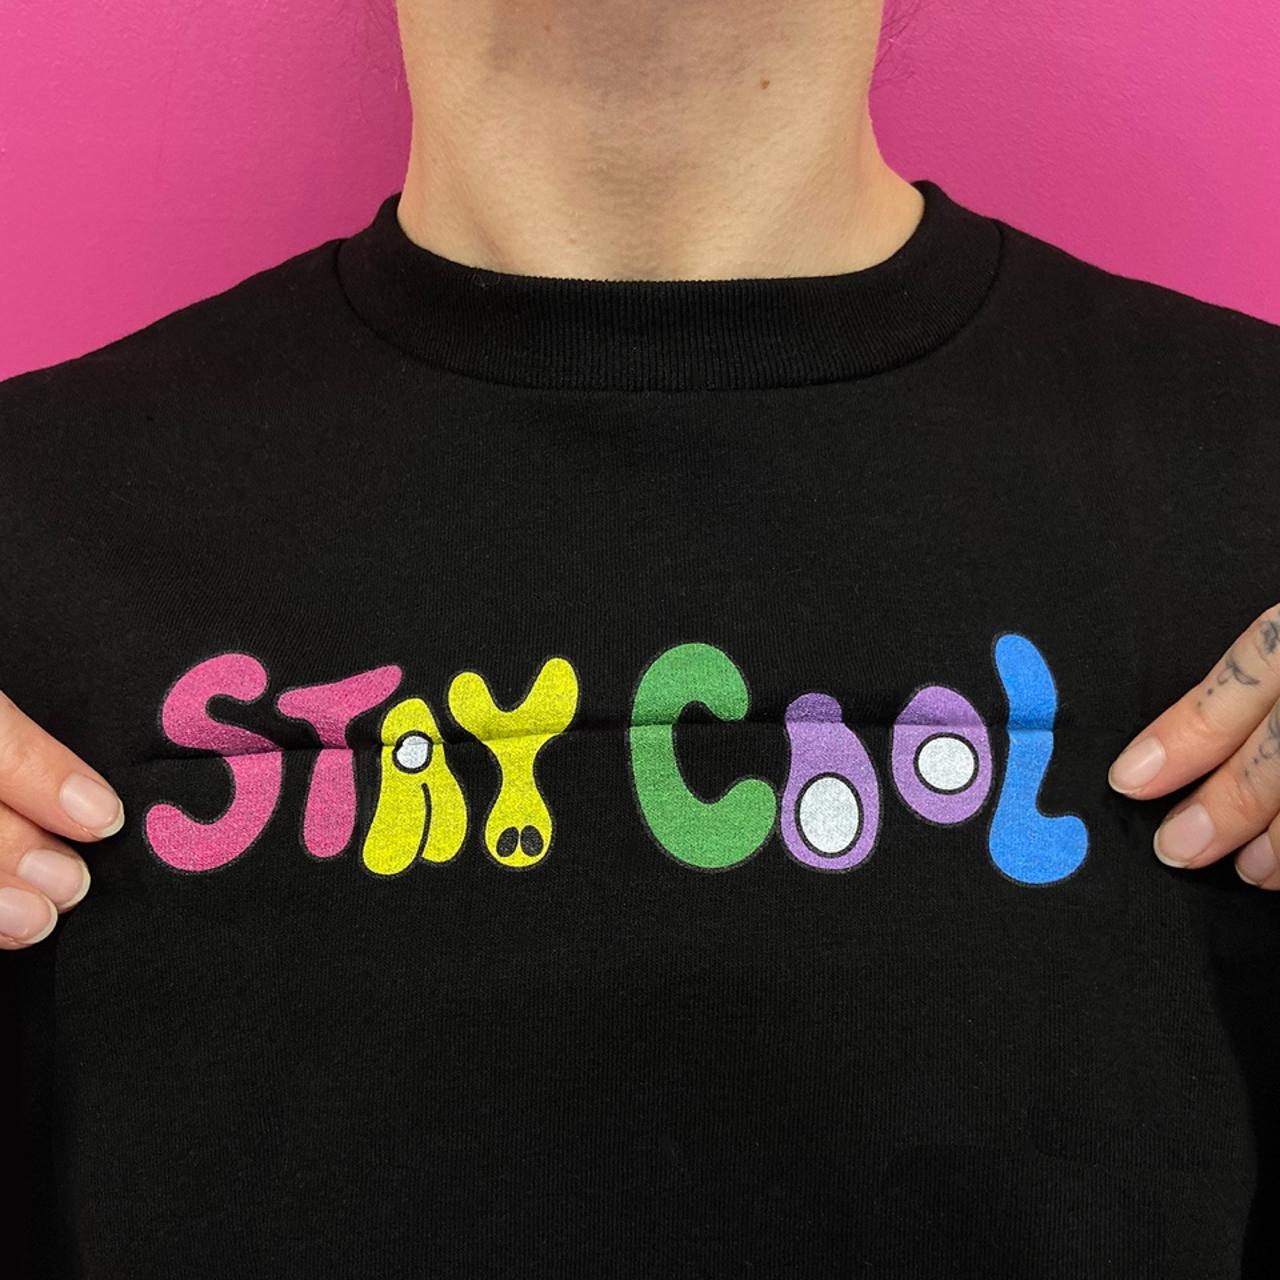 STAY COOL NYC Men's T-shirt